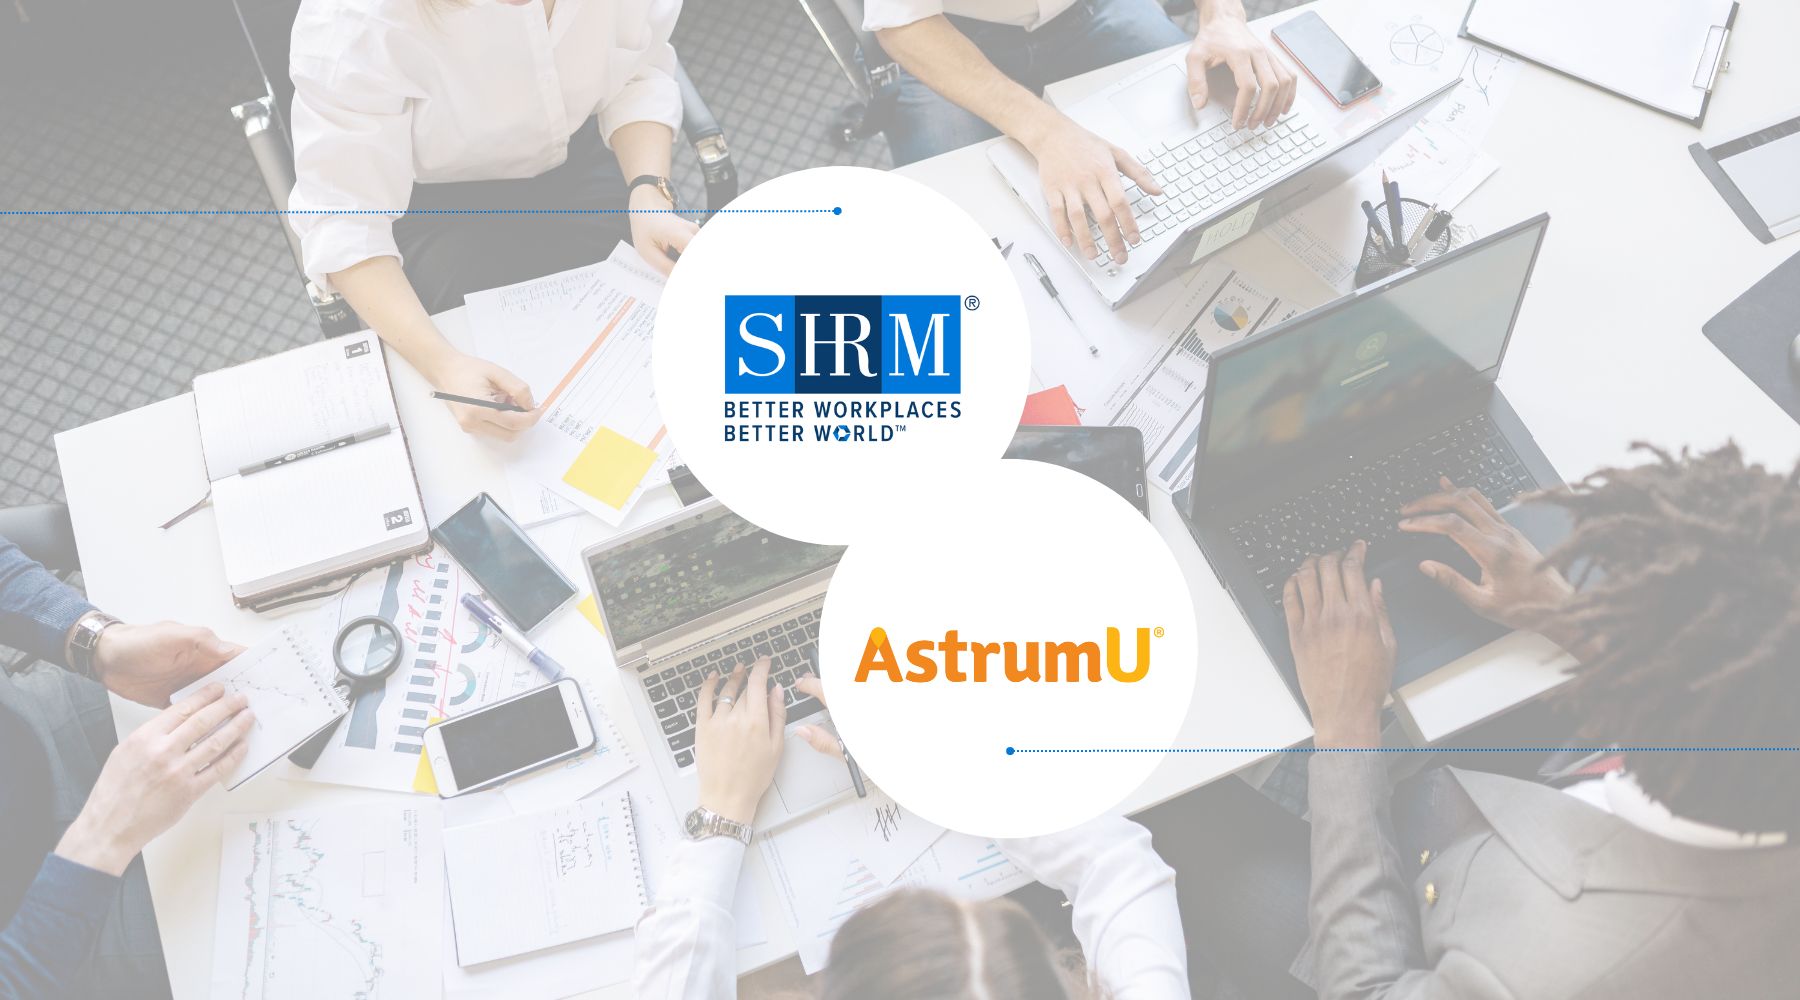 SHRM x AstrumU logos